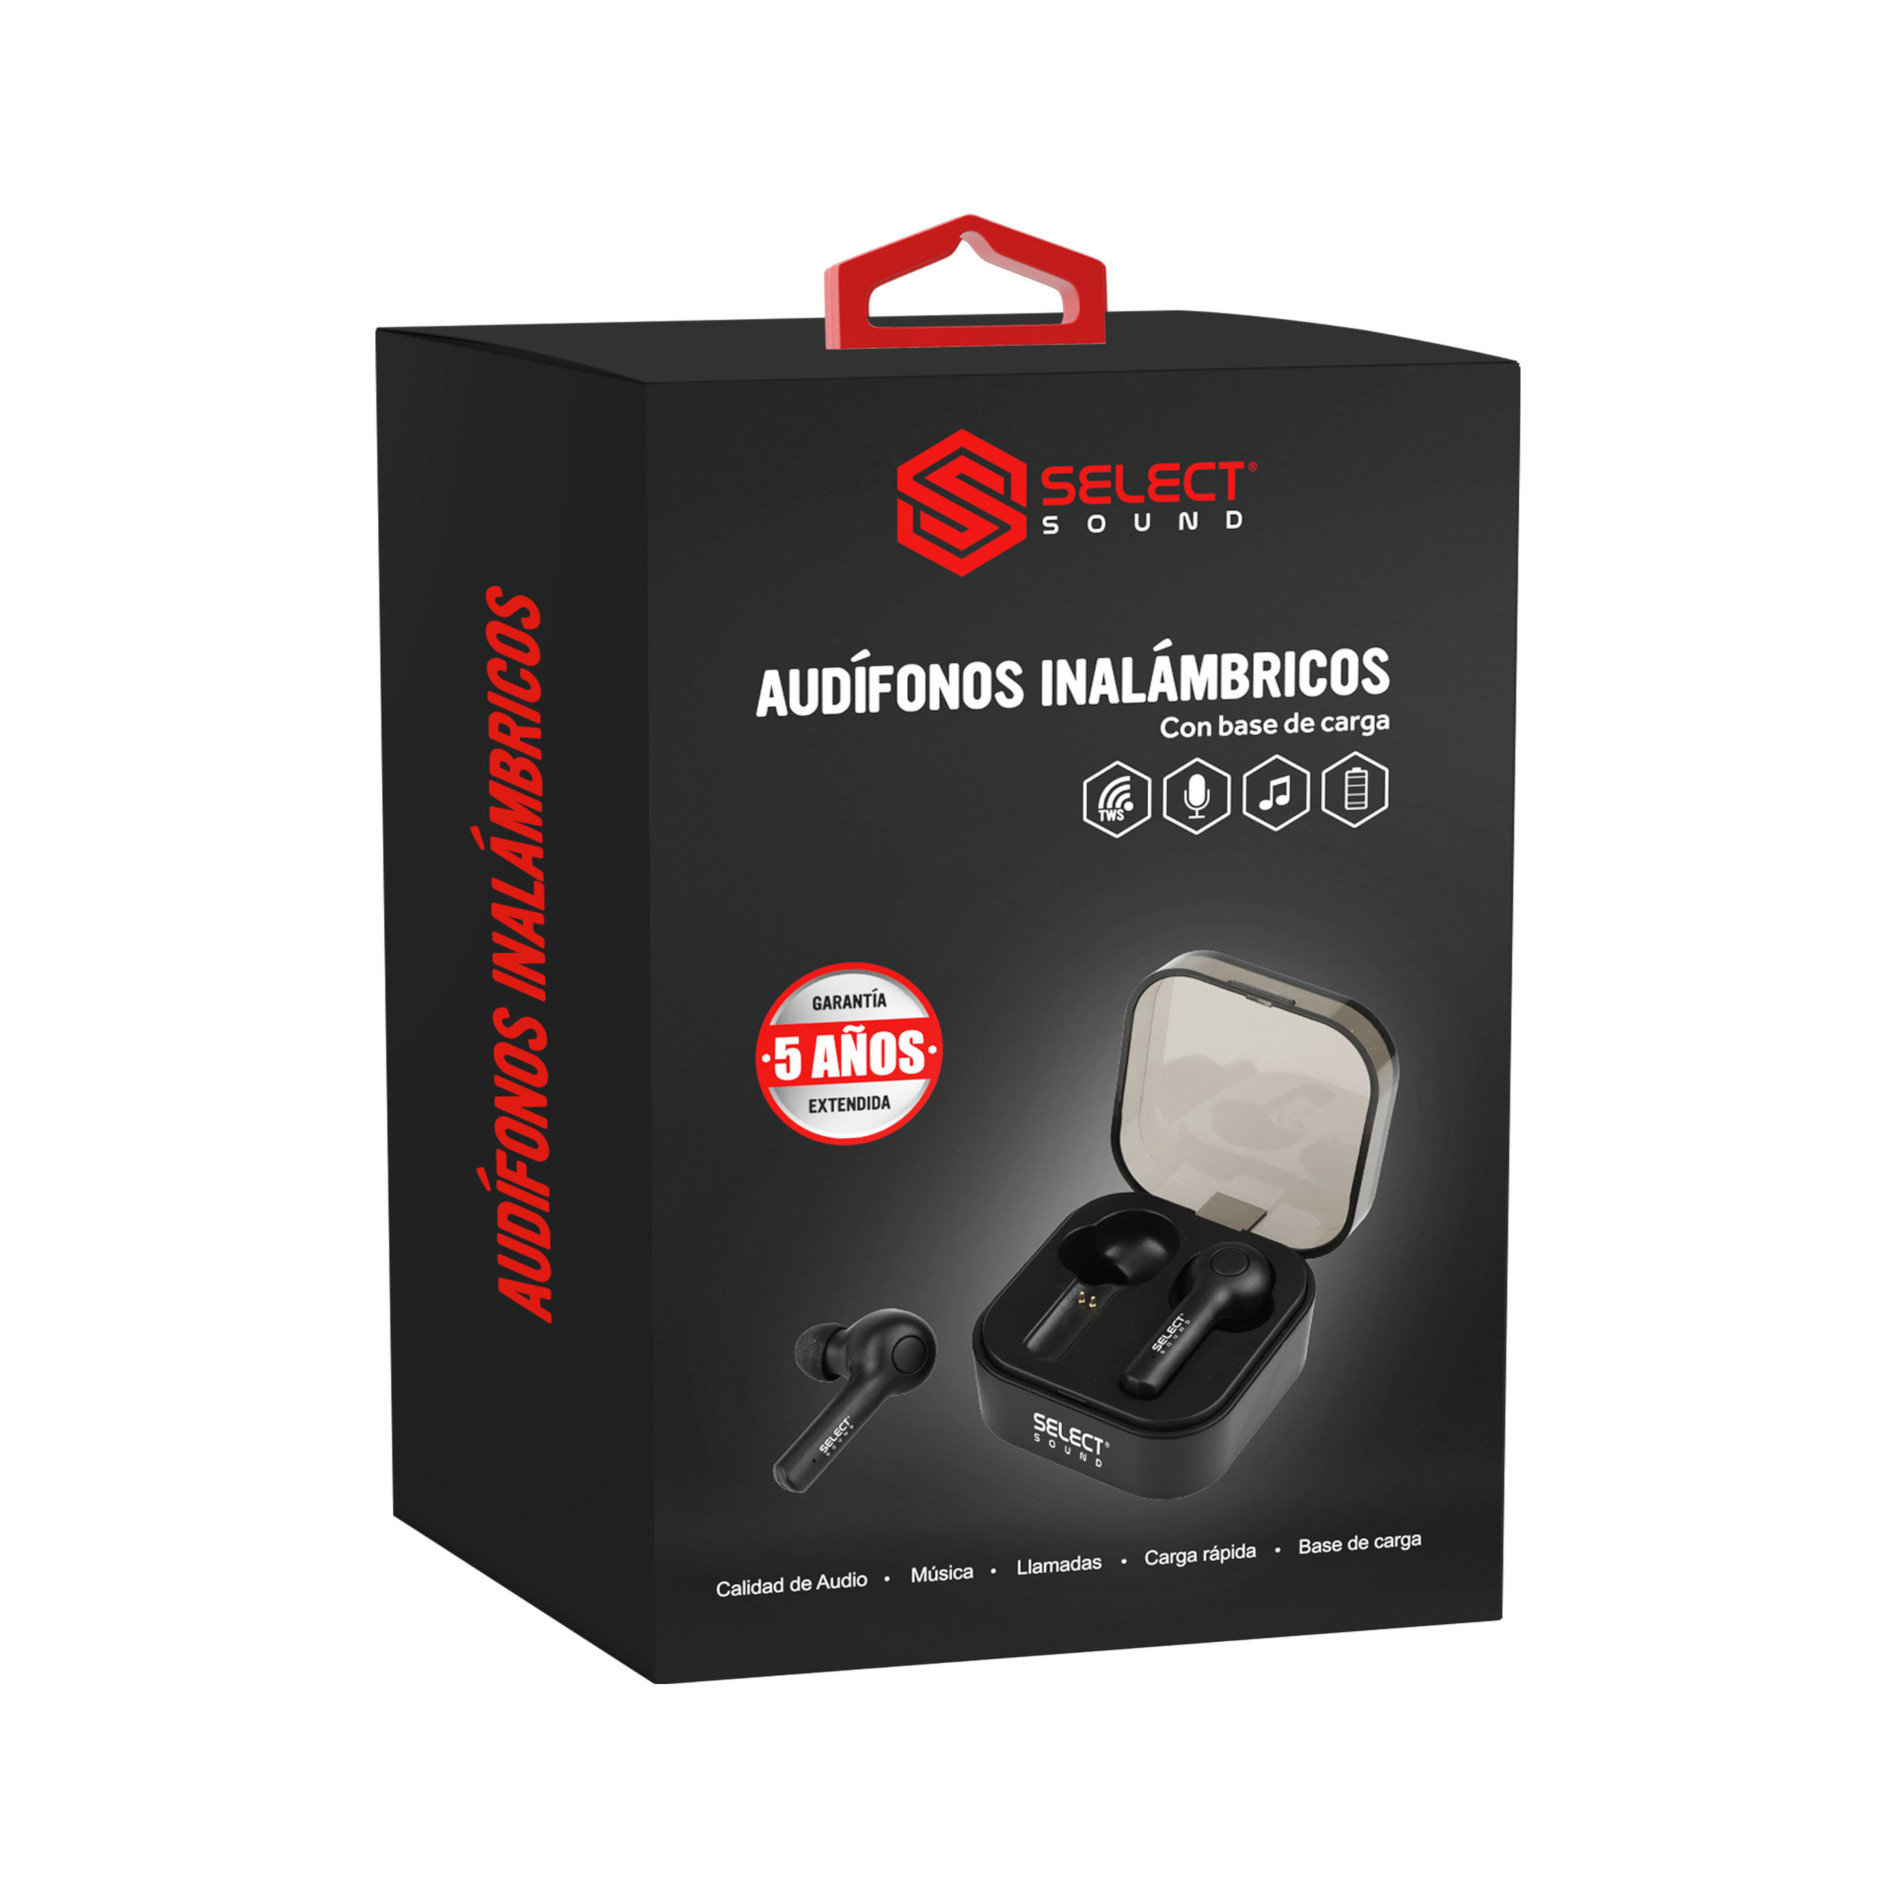 Audífonos Inalámbricos Bluetooth Select Sound Con Tws